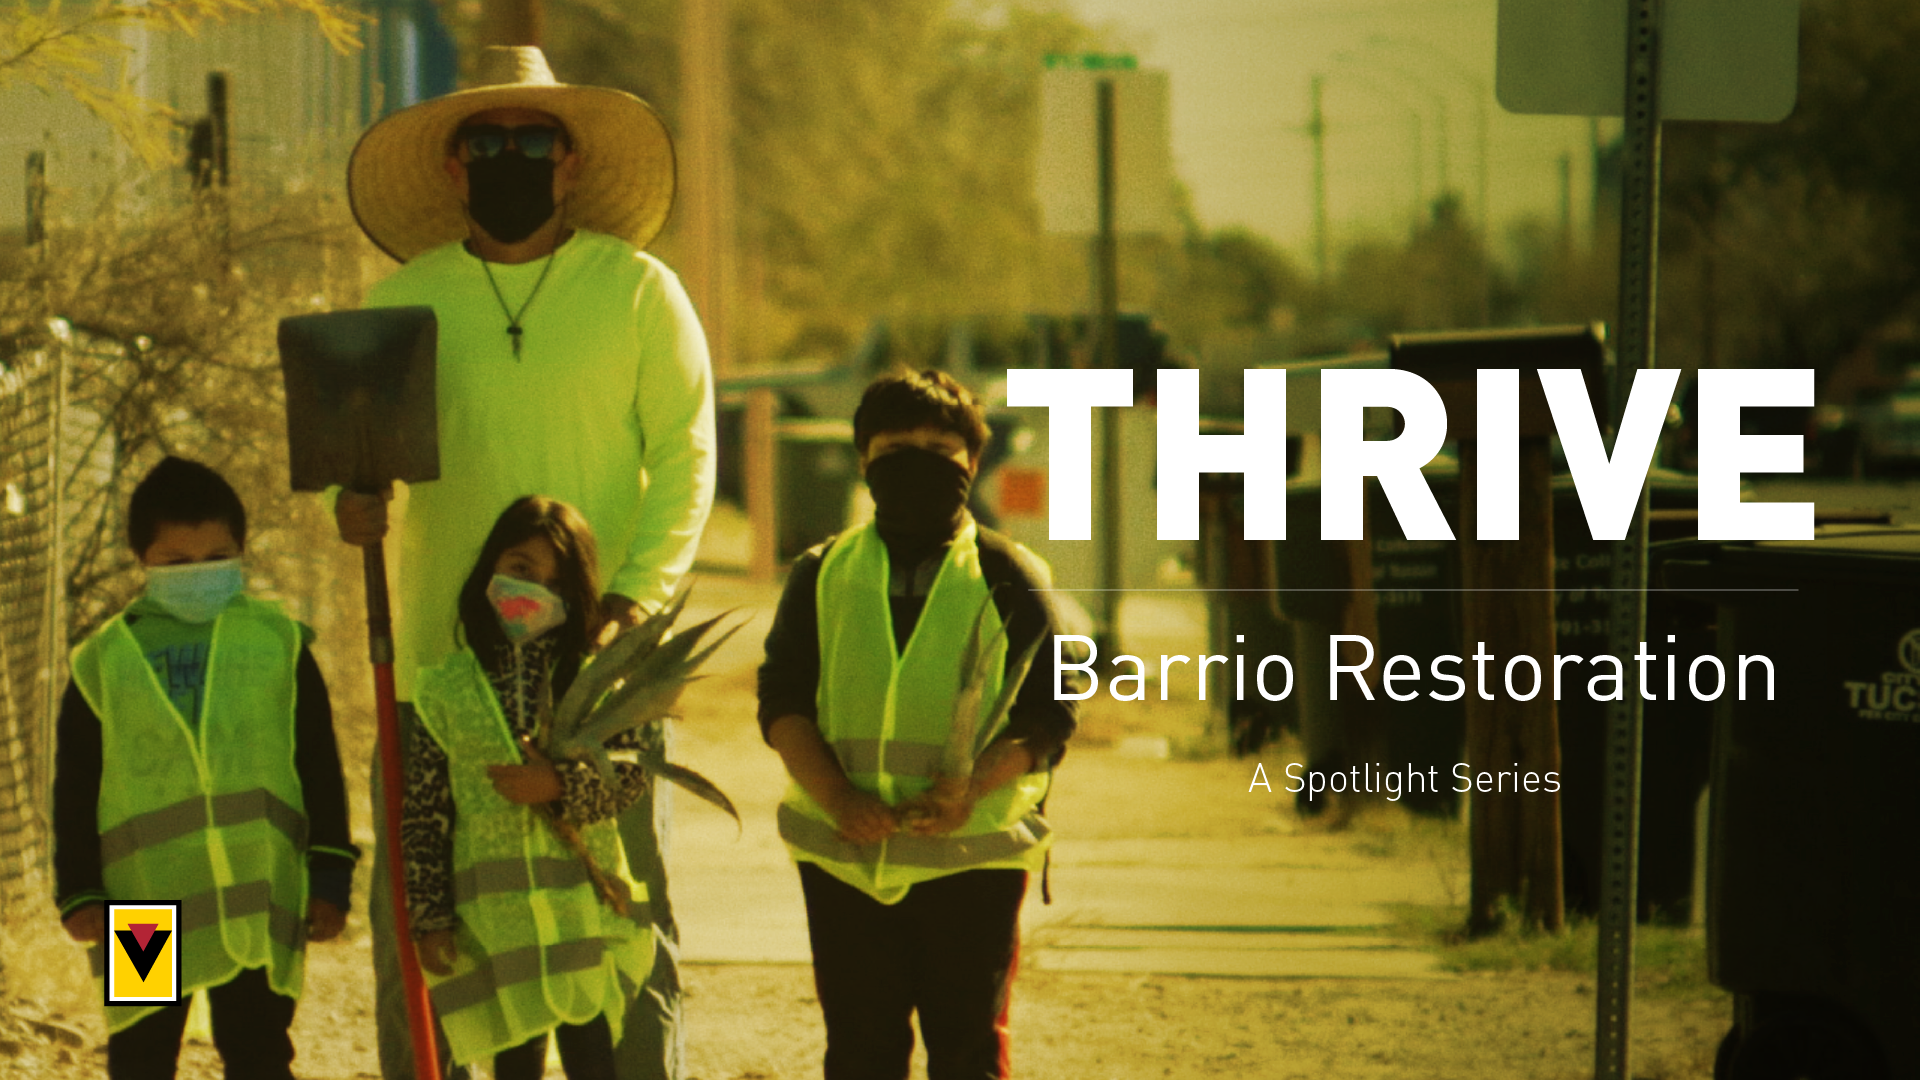 Barrio Restoration - Thrive